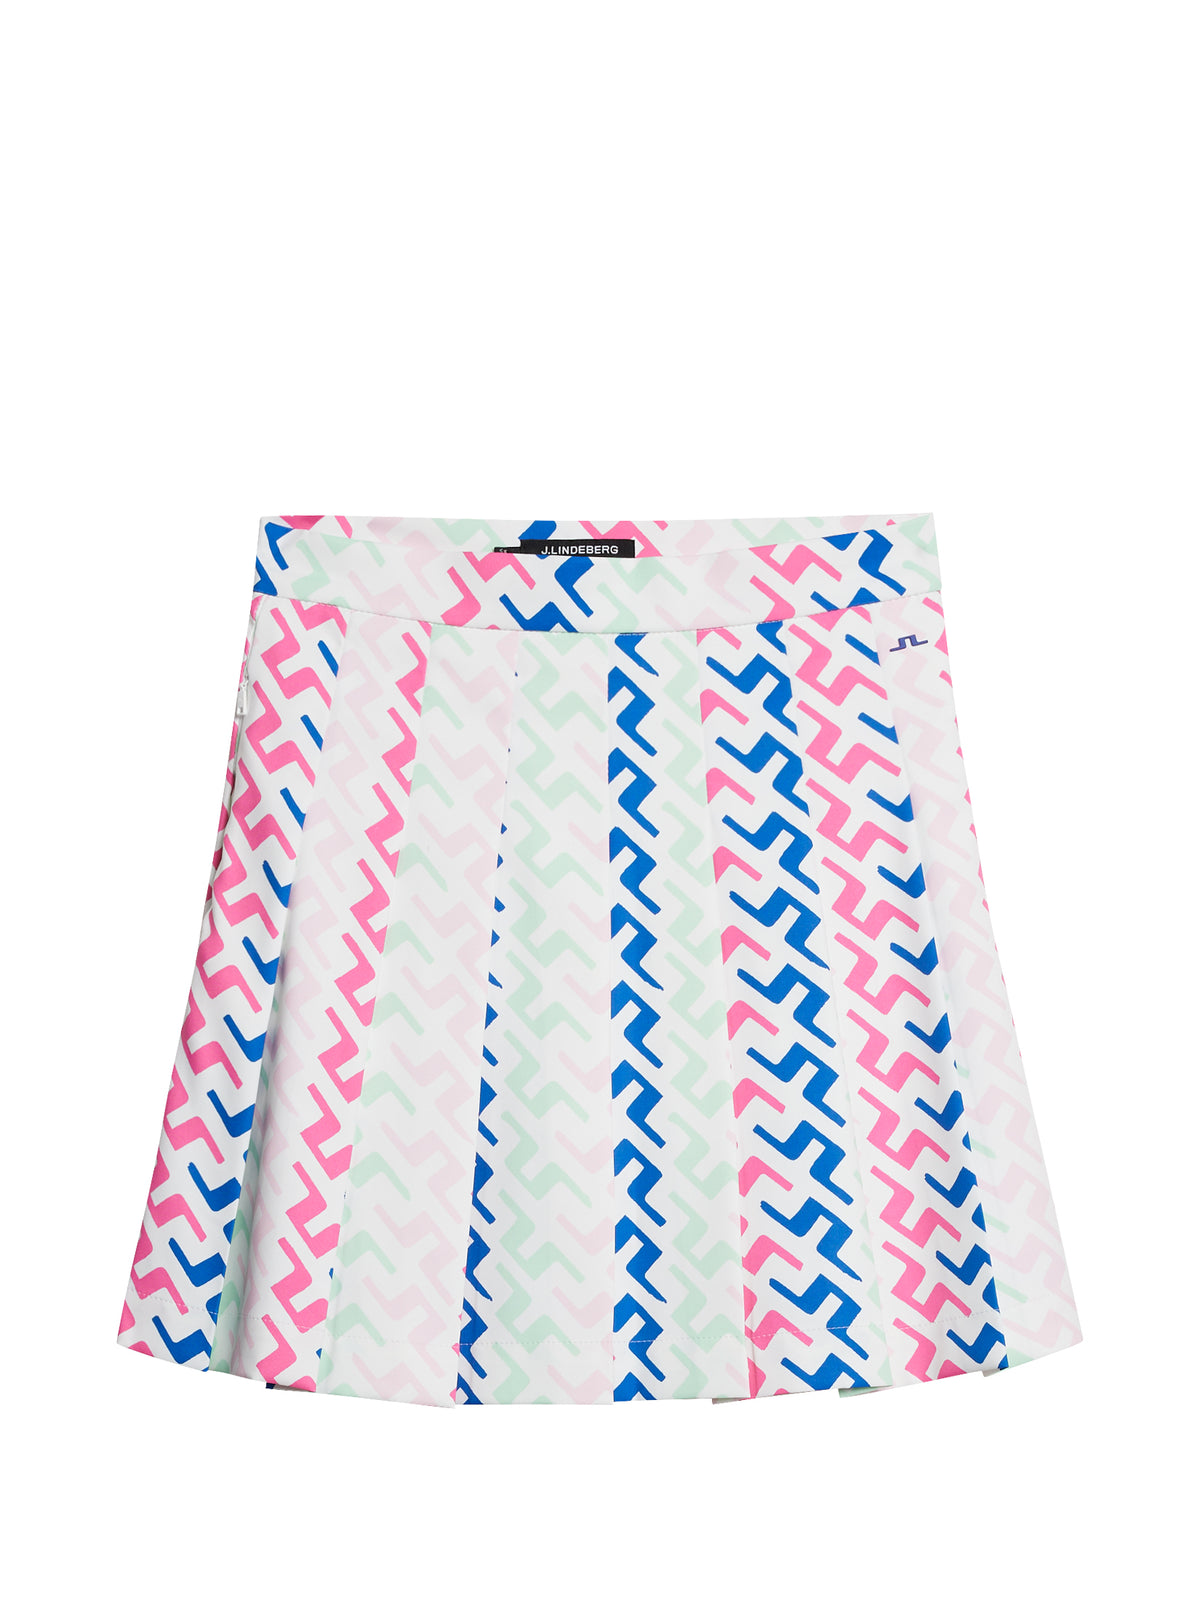 Adina Print Skirt / Pink Painted Bridge